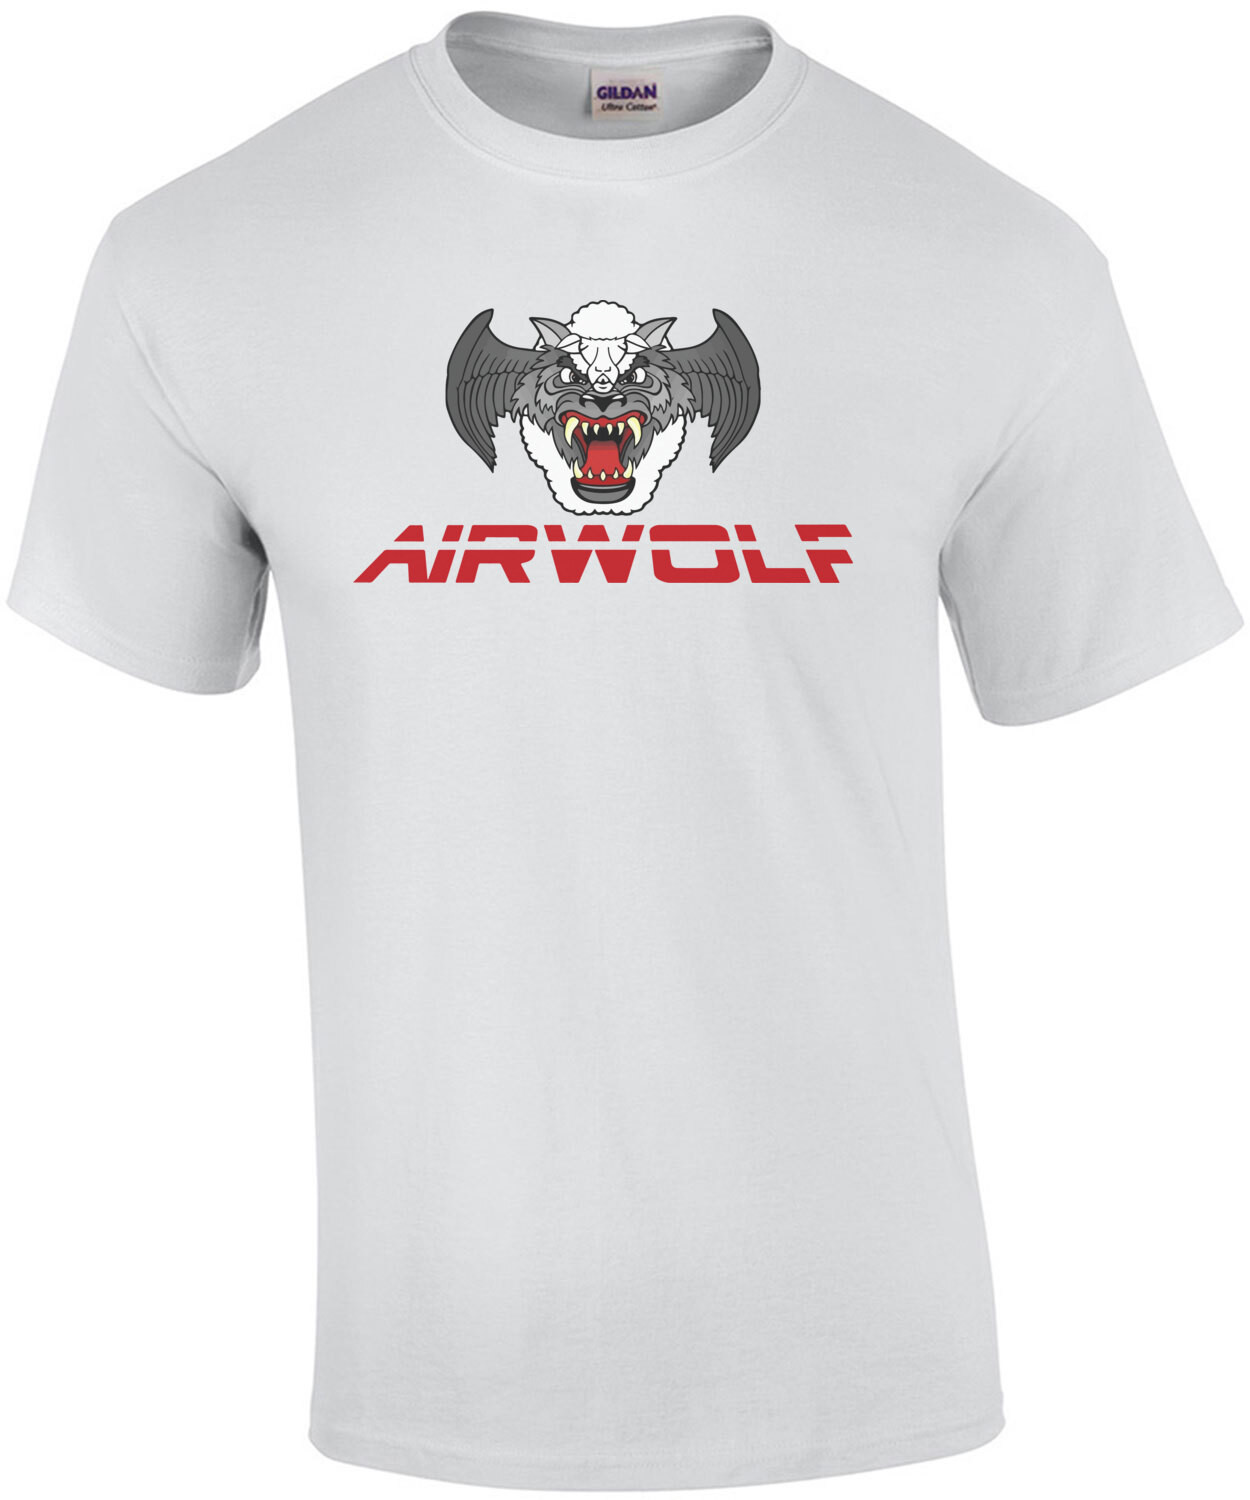 Airwolf - Thundercats - 80's T-Shirt